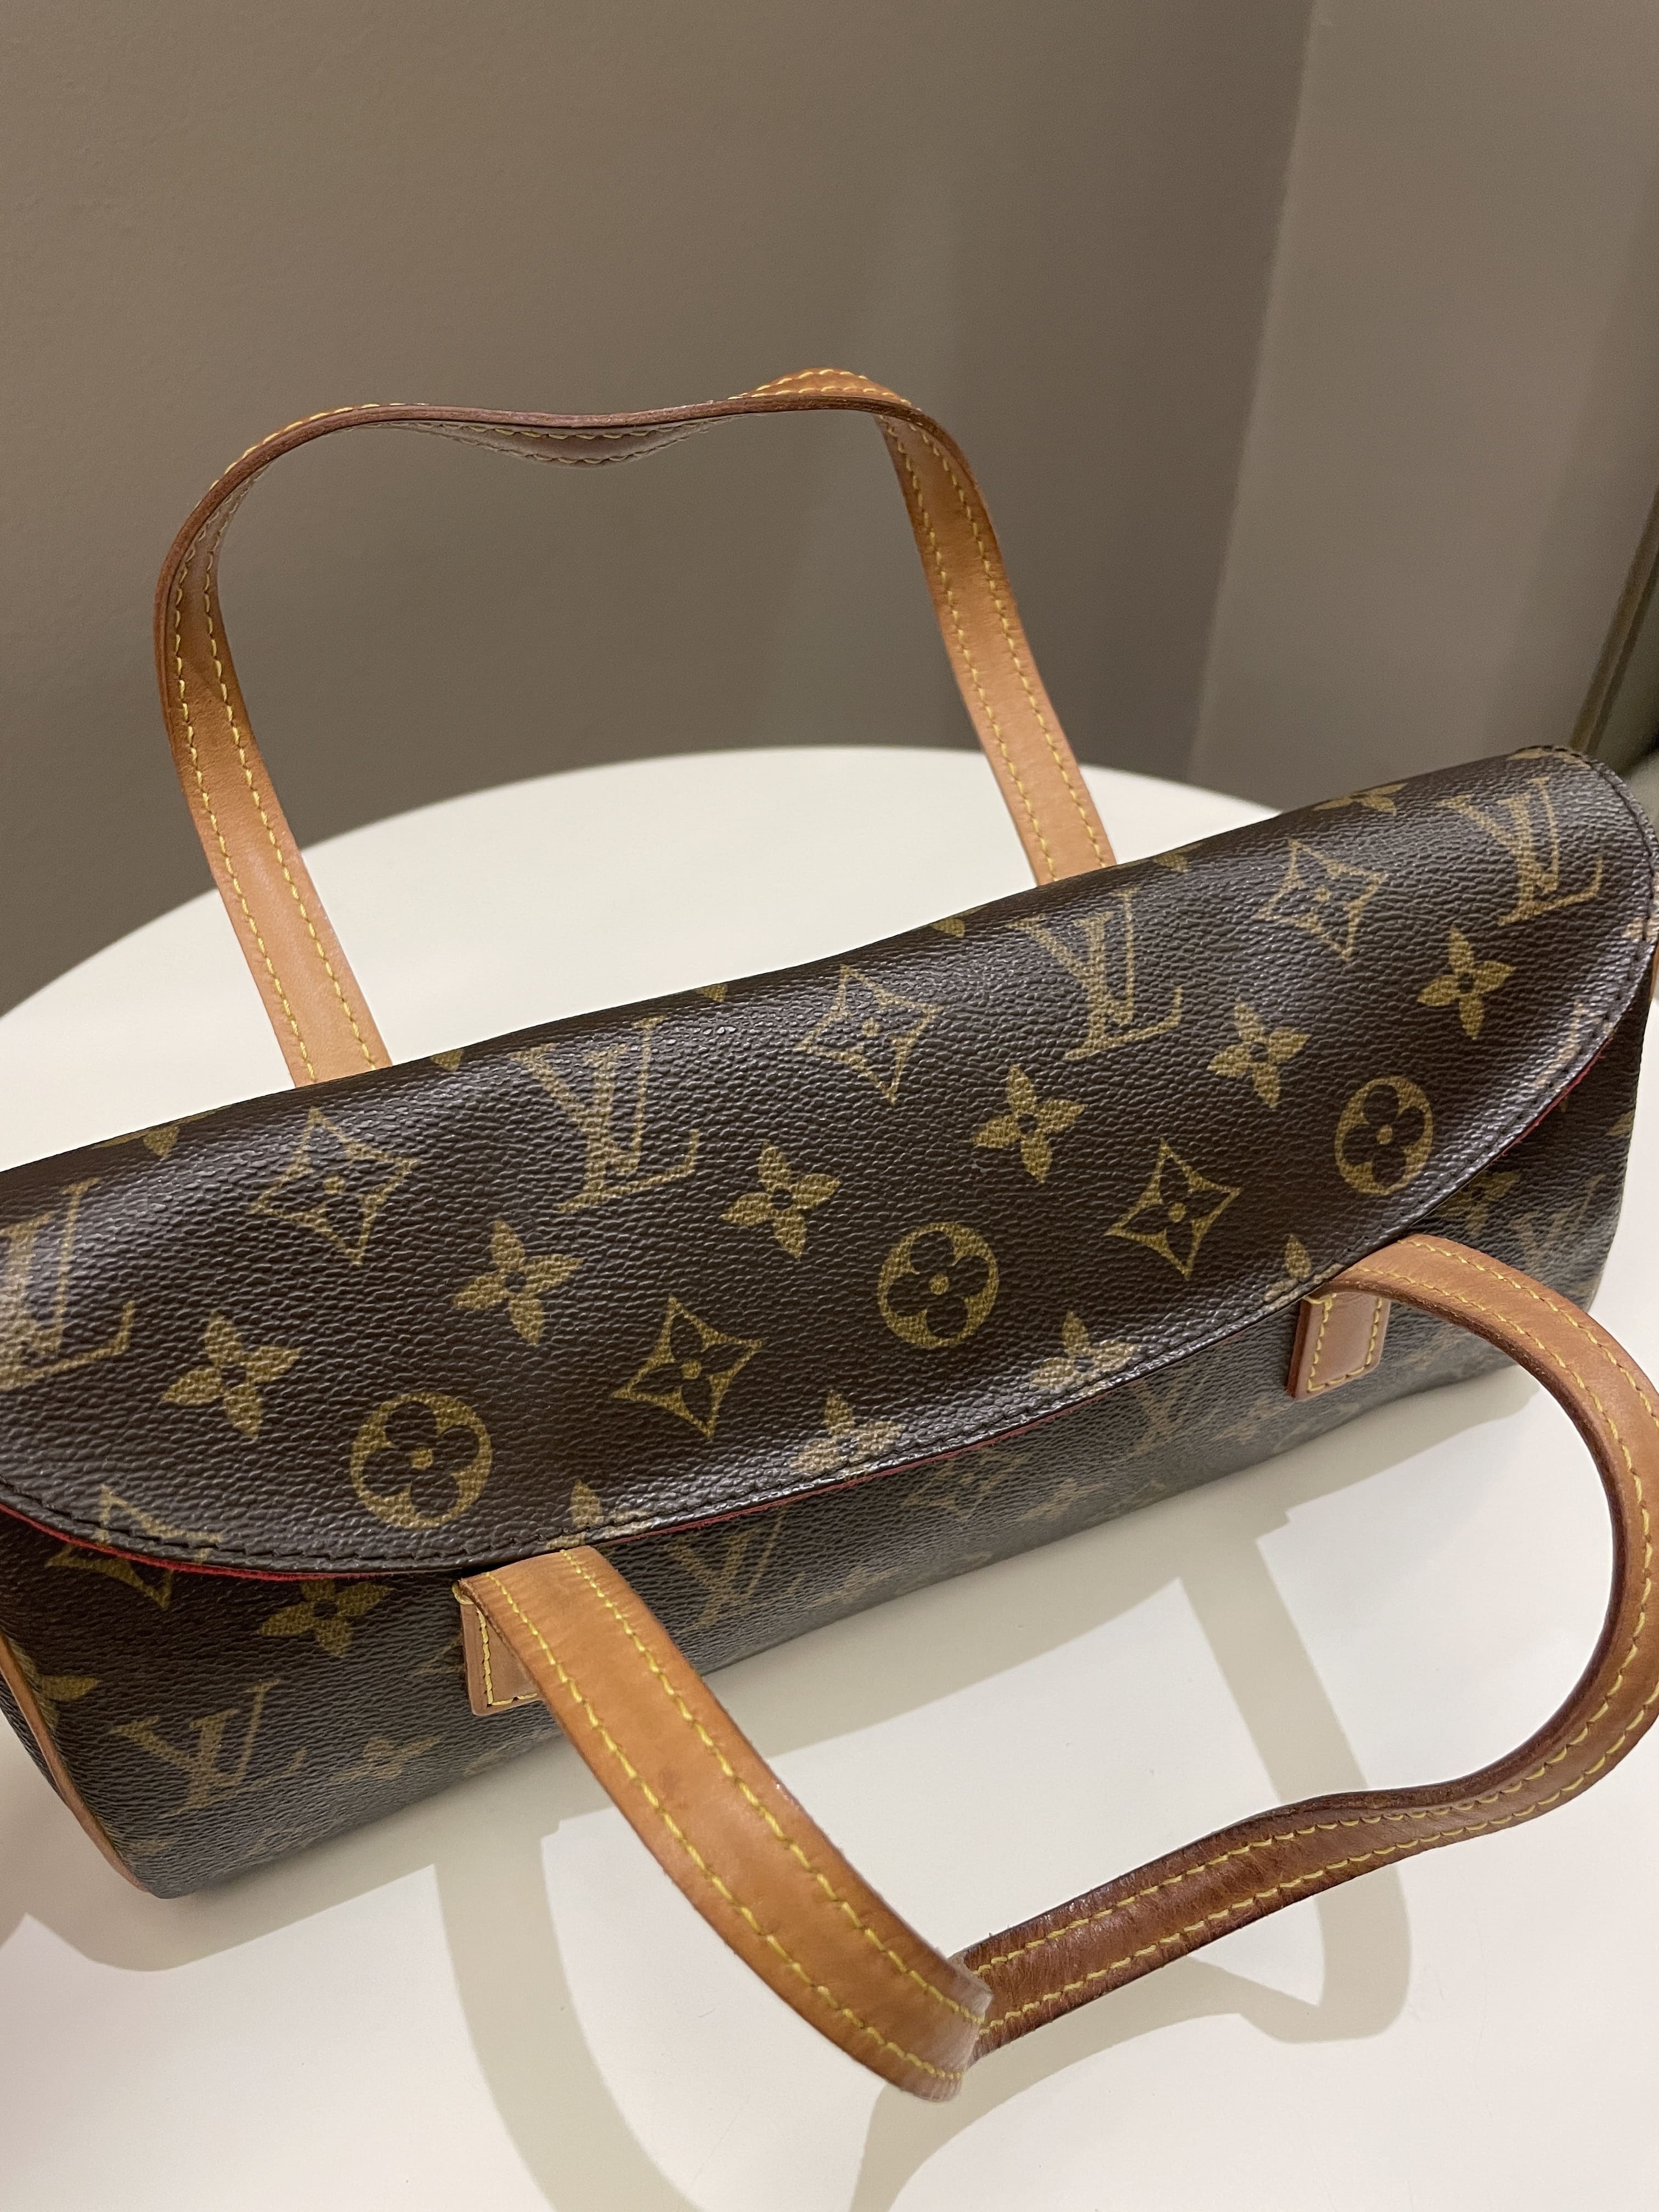 Louis Vuitton Sonatine Handbag Monogram Canvas Brown